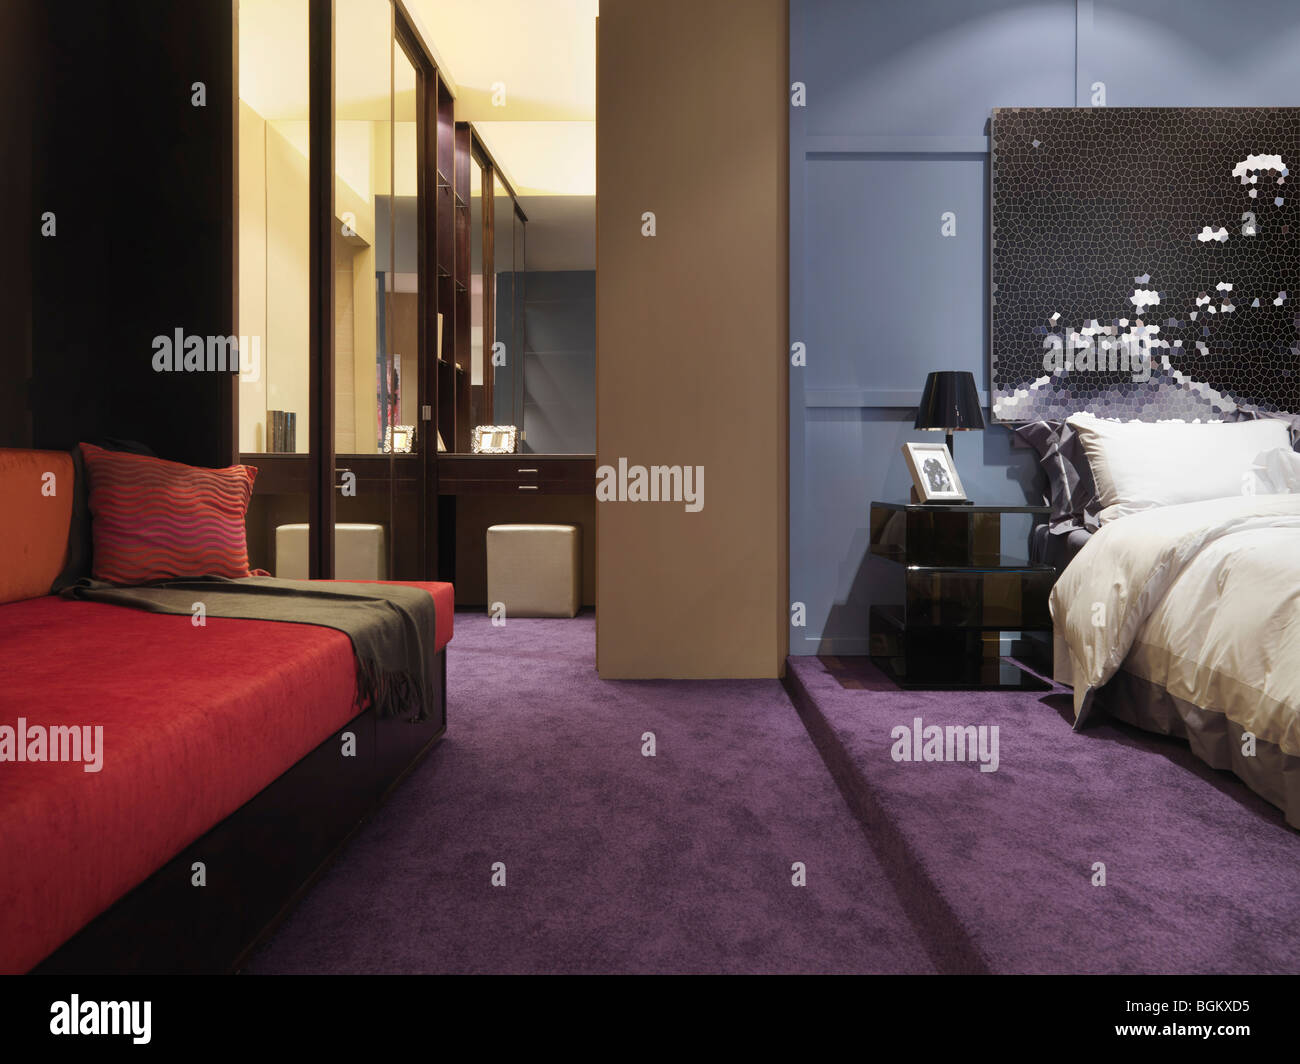 Purple carpet in modern bedroom Stock Photo - Alamy